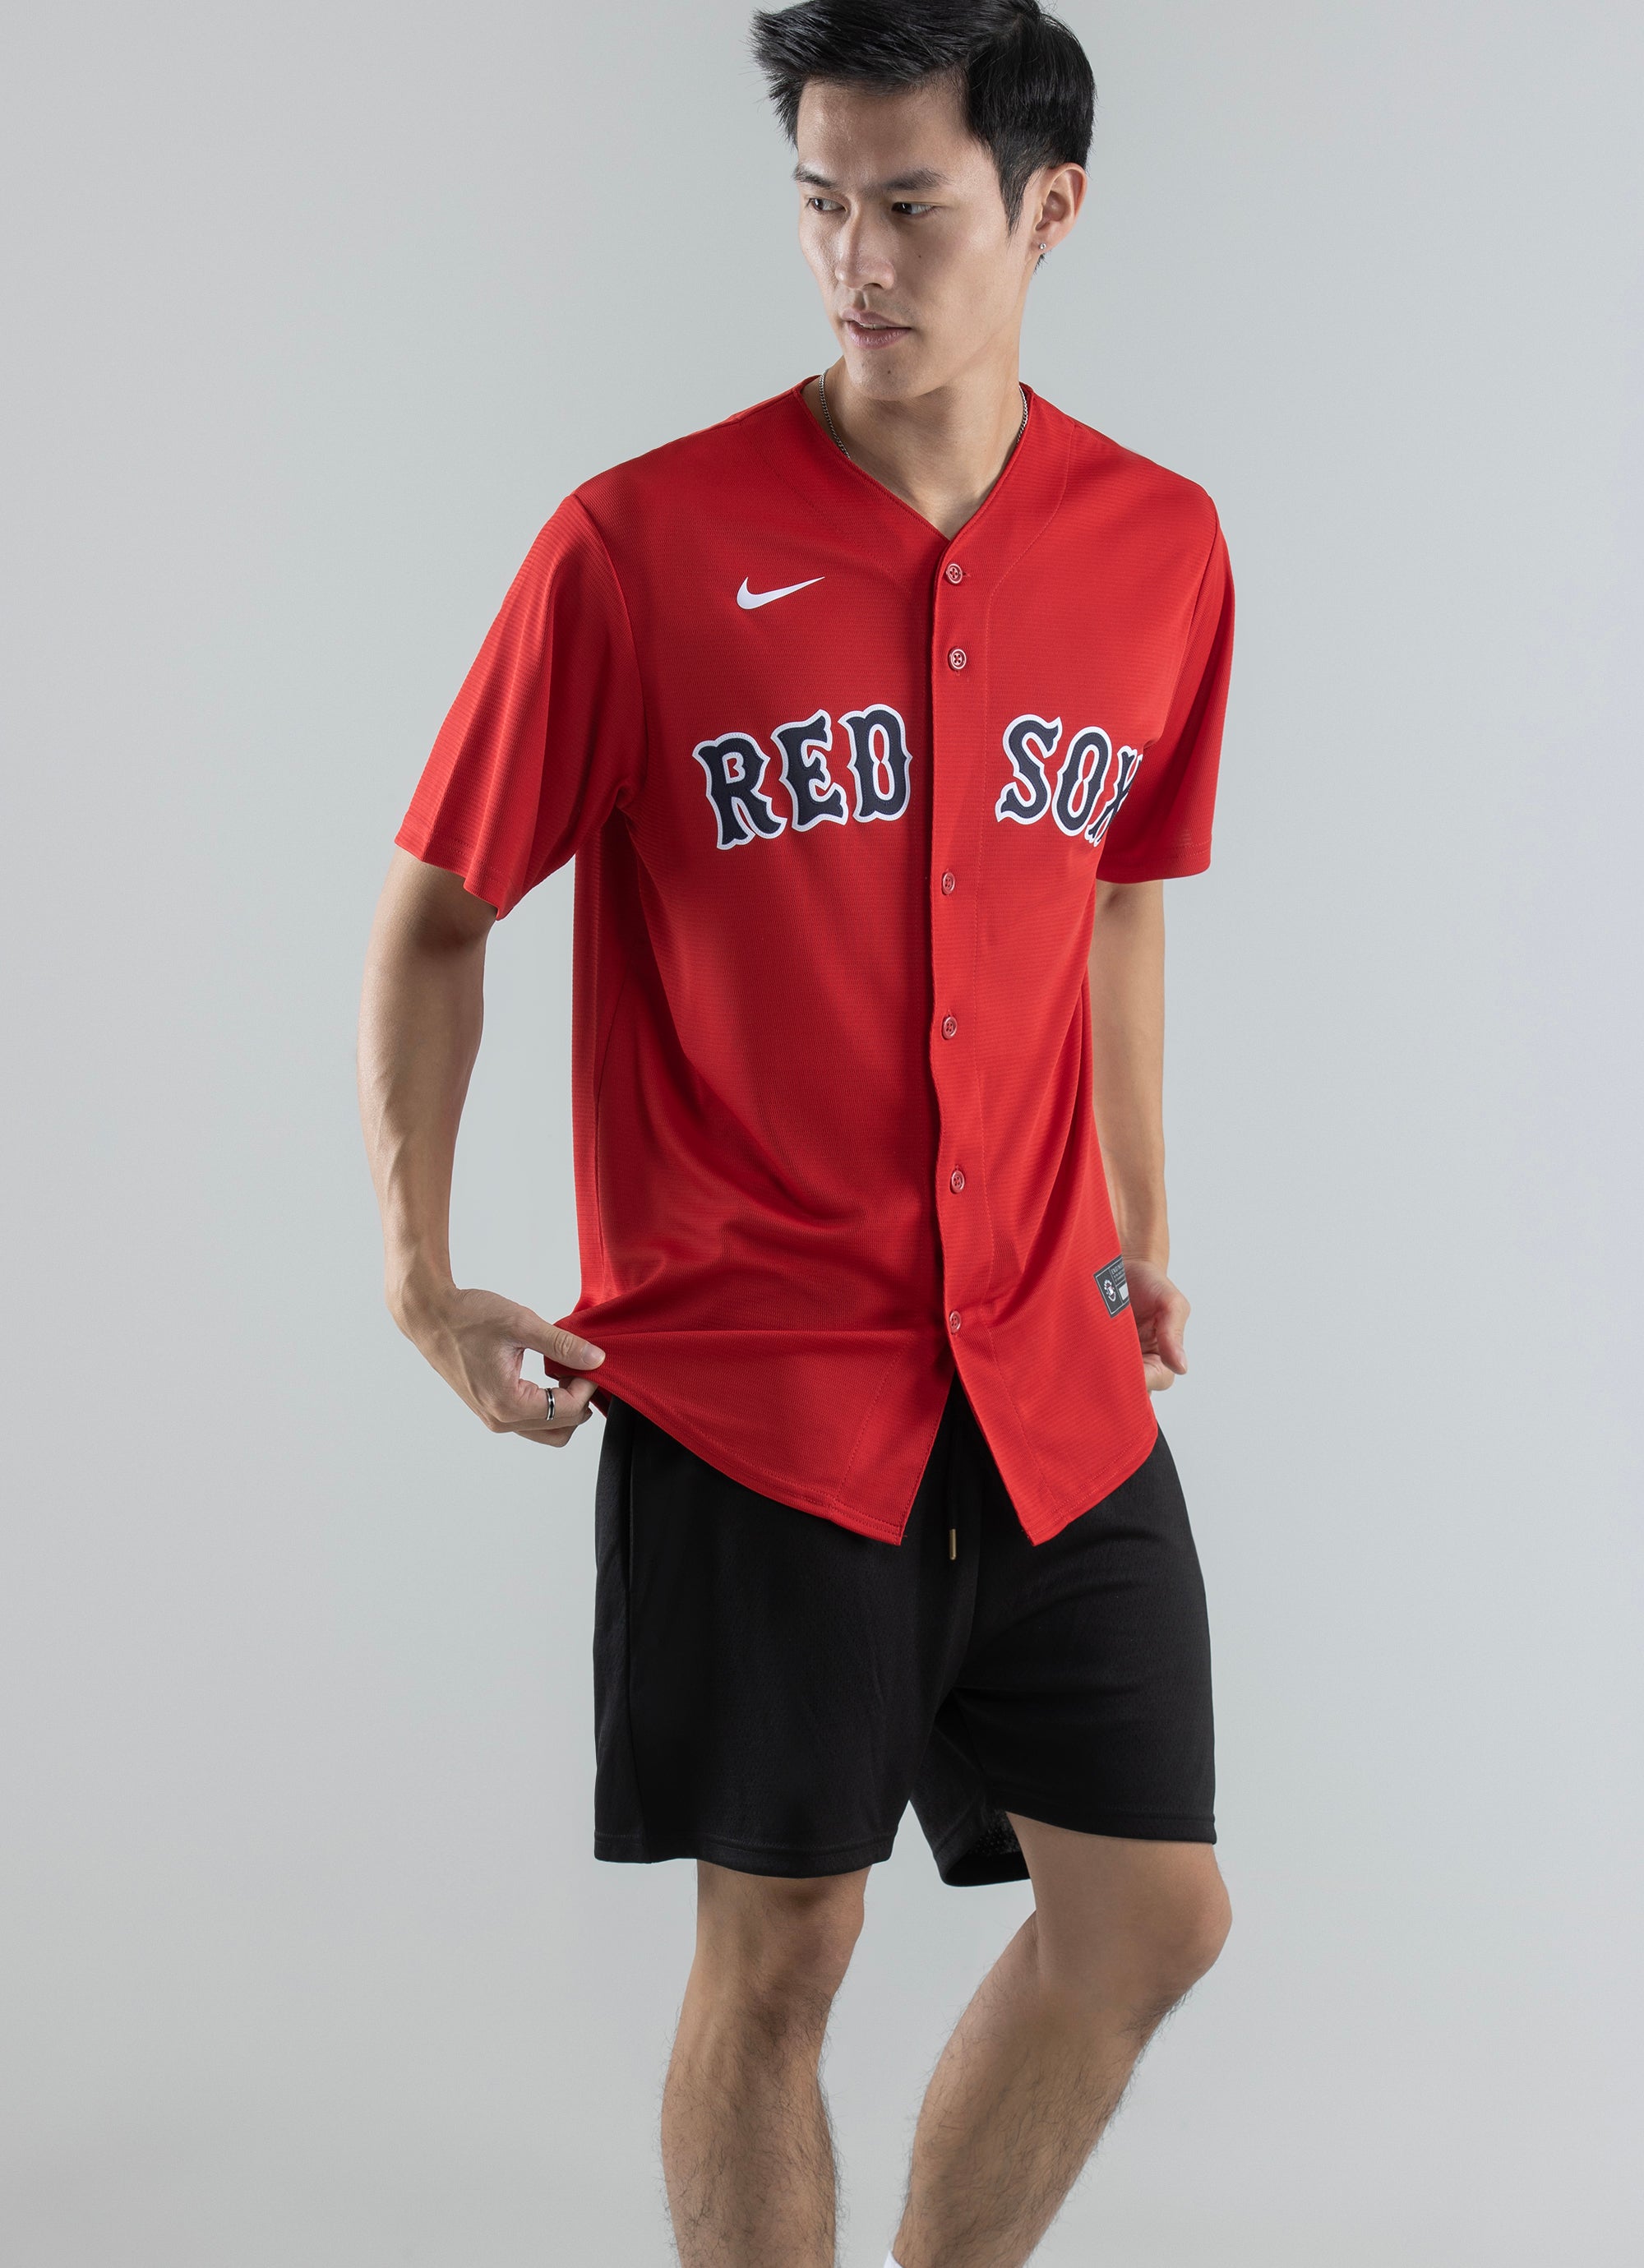 Nike MLB Boston Red Sox Large Logo Short Sleeve T-Shirt Red